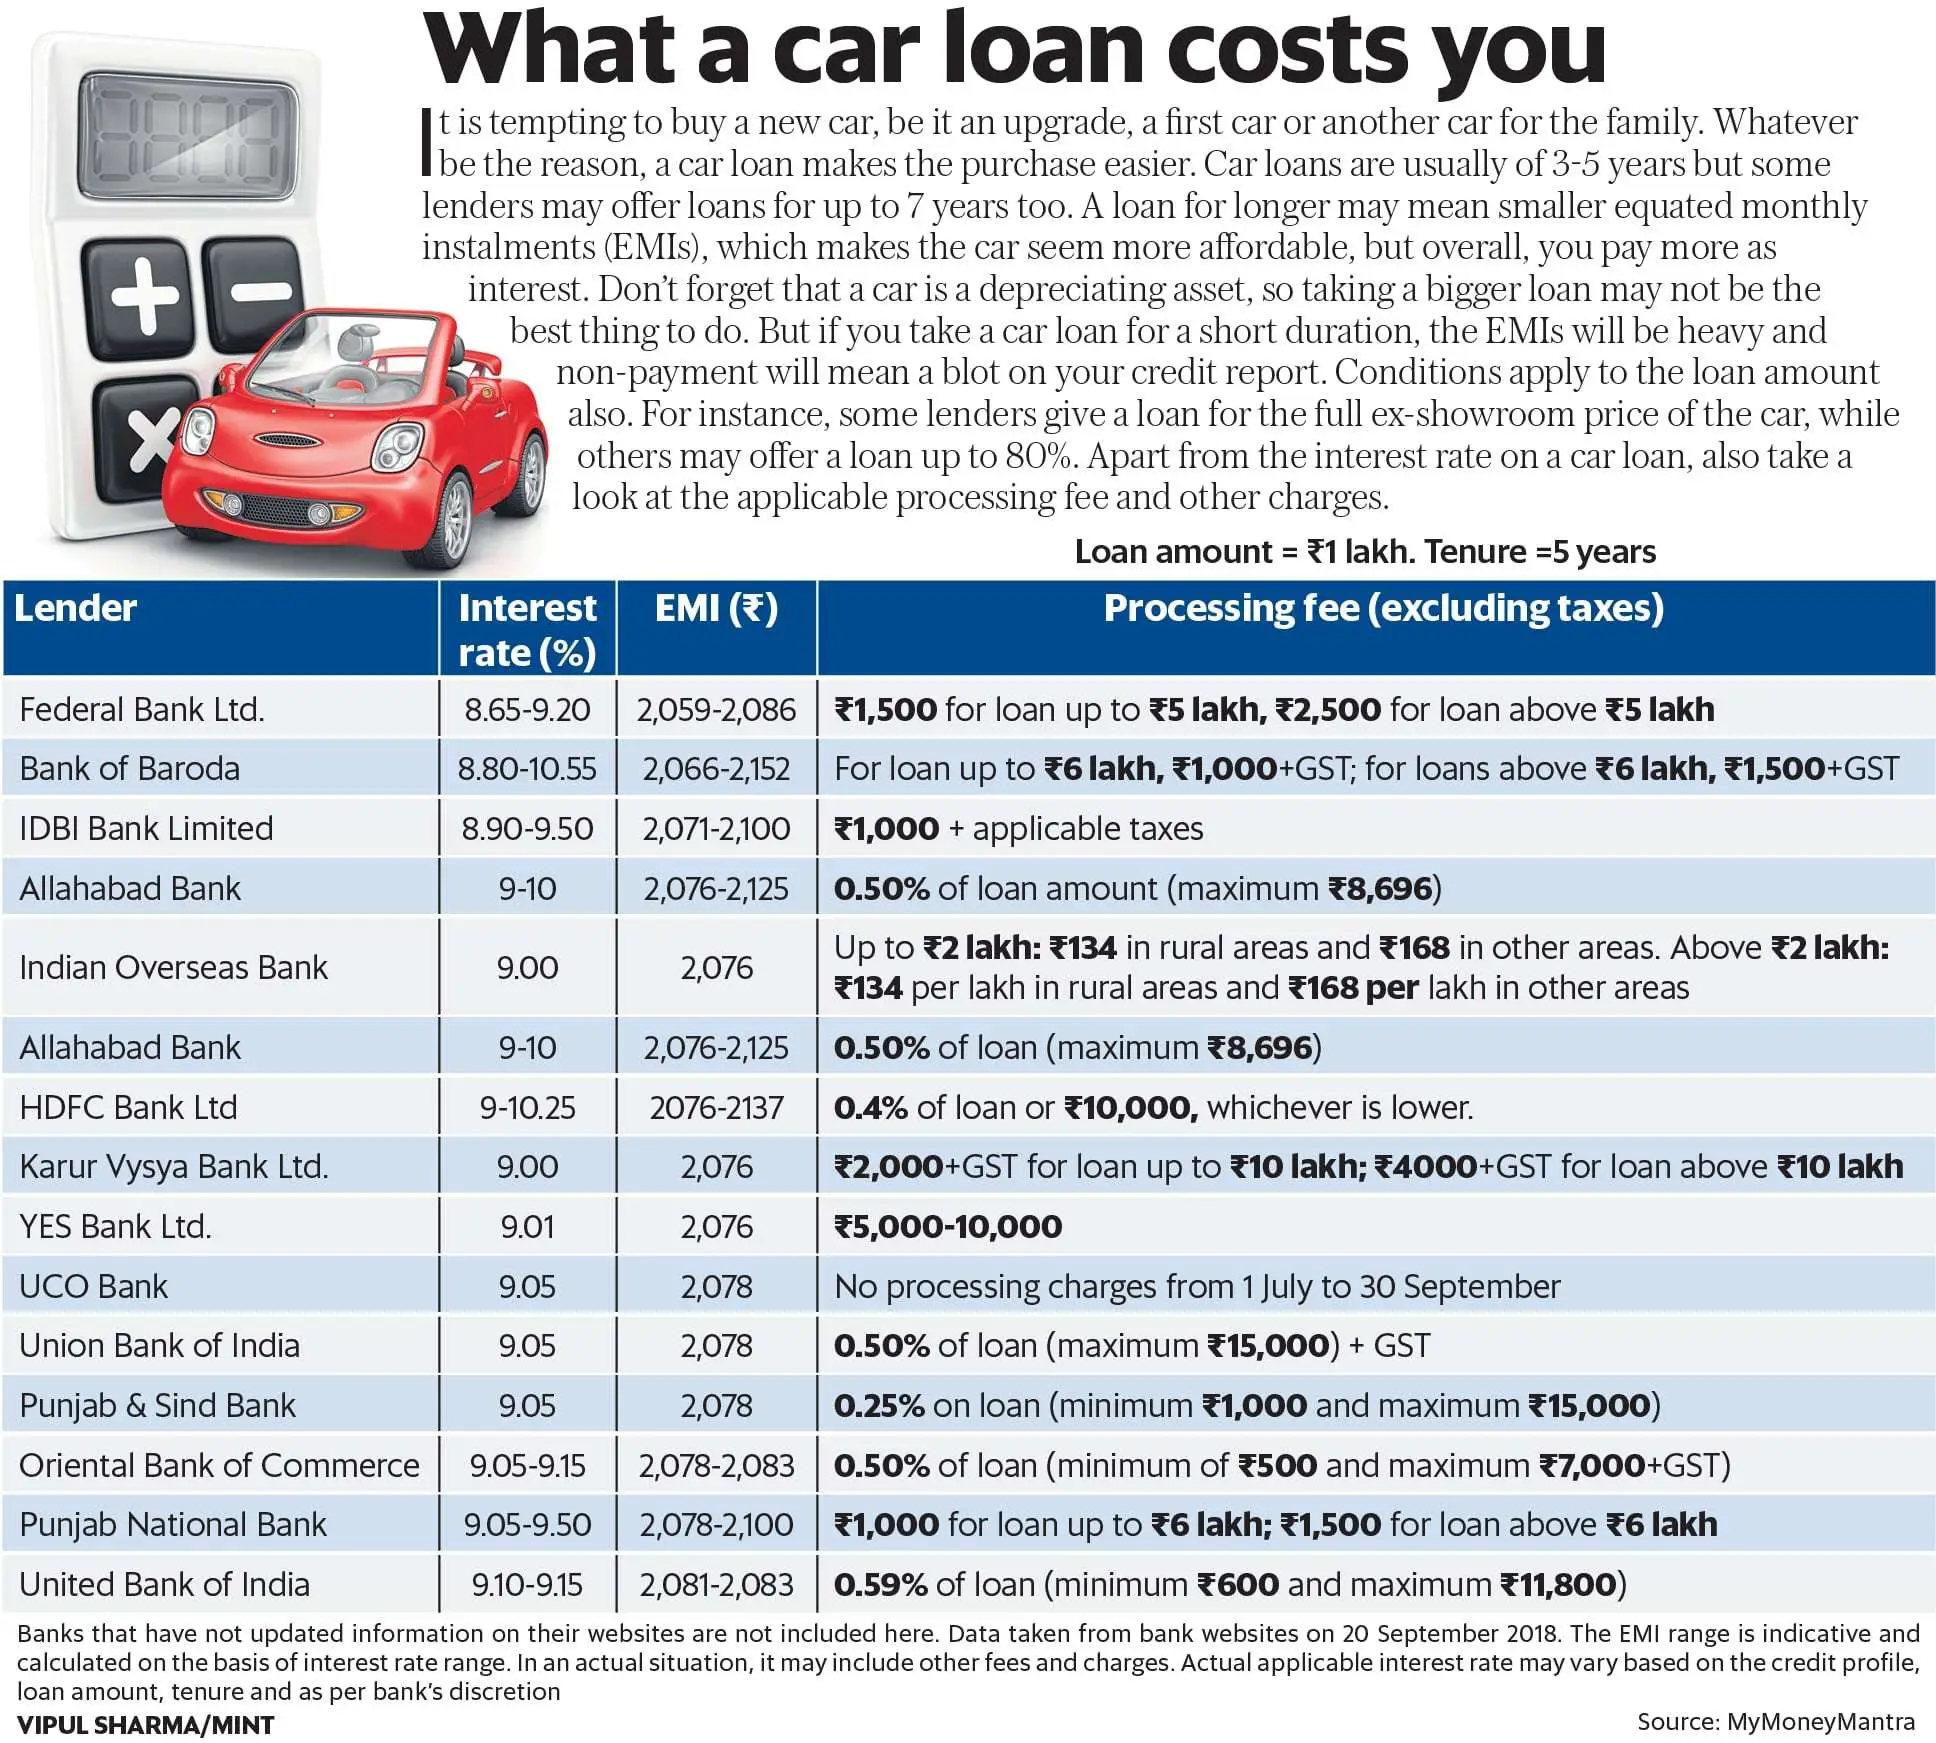 Car loan comparison: Interest rate, EMI, processing fee